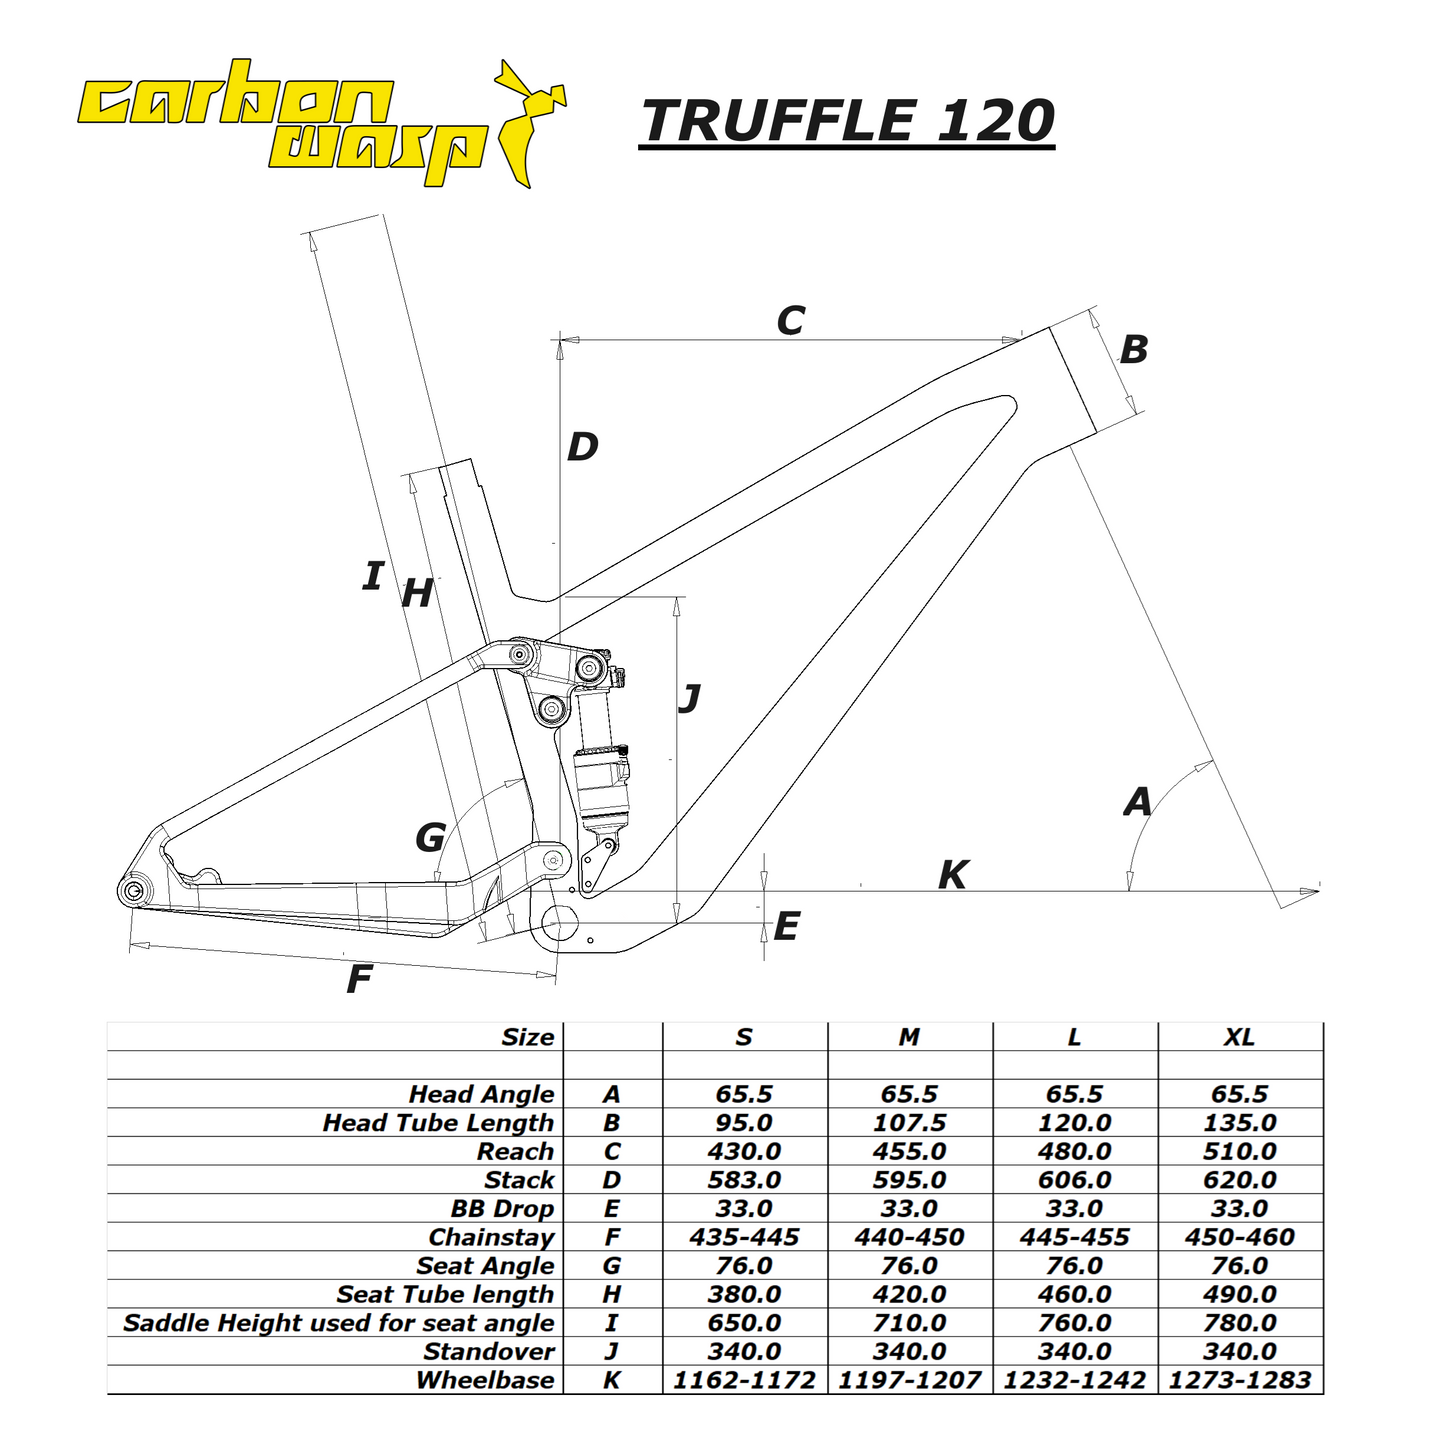 Truffle-120 Frame